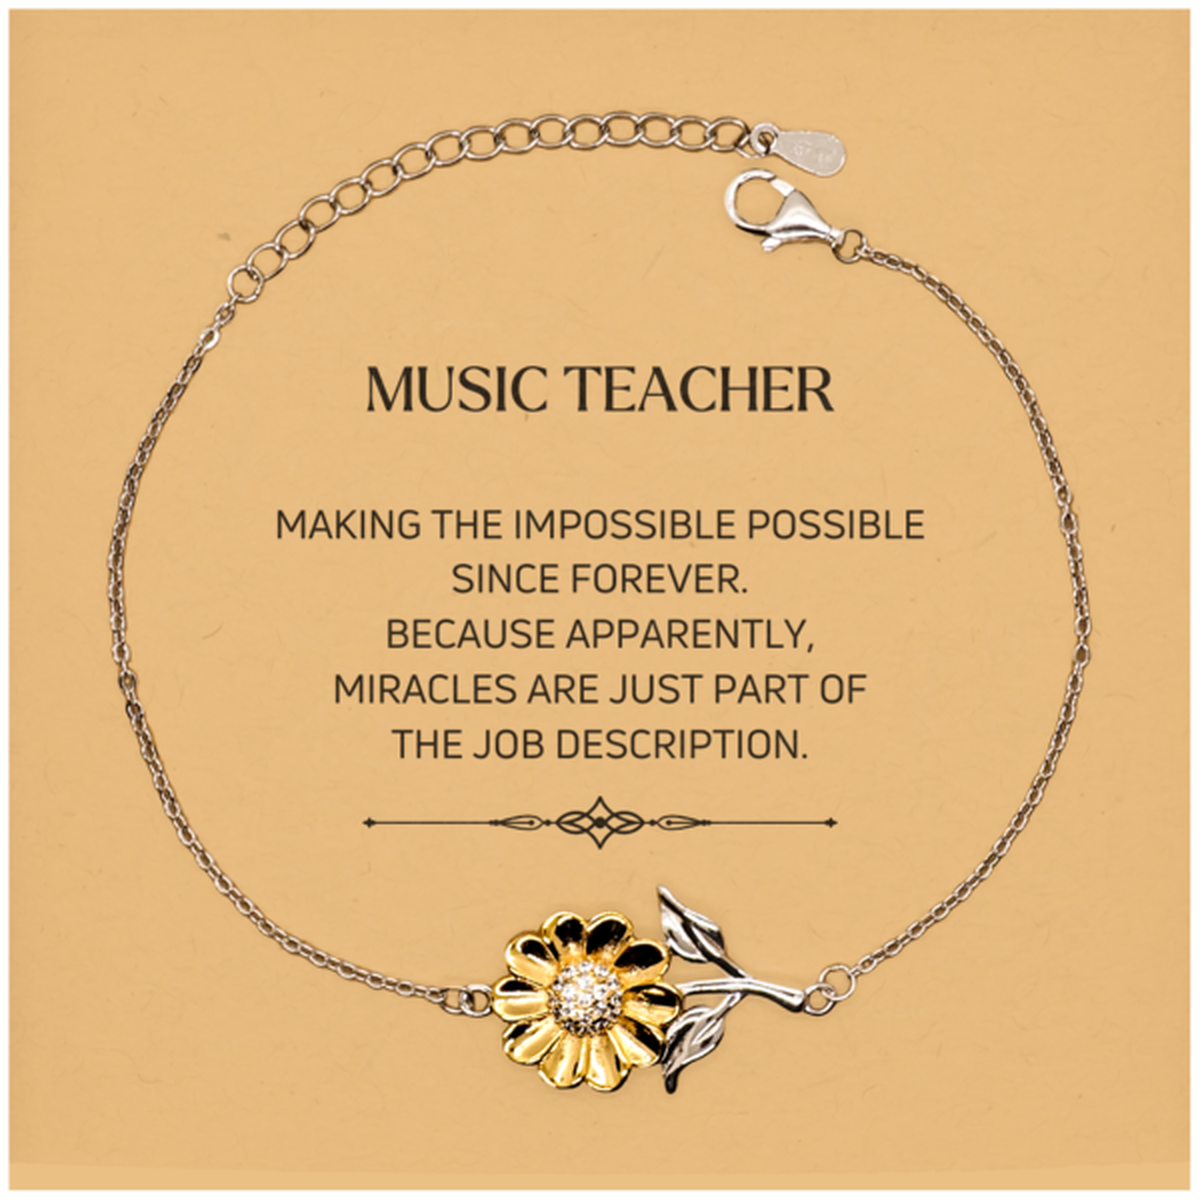 Funny Music Teacher Gifts, Miracles are just part of the job description, Inspirational Birthday Christmas Sunflower Bracelet For Music Teacher, Men, Women, Coworkers, Friends, Boss